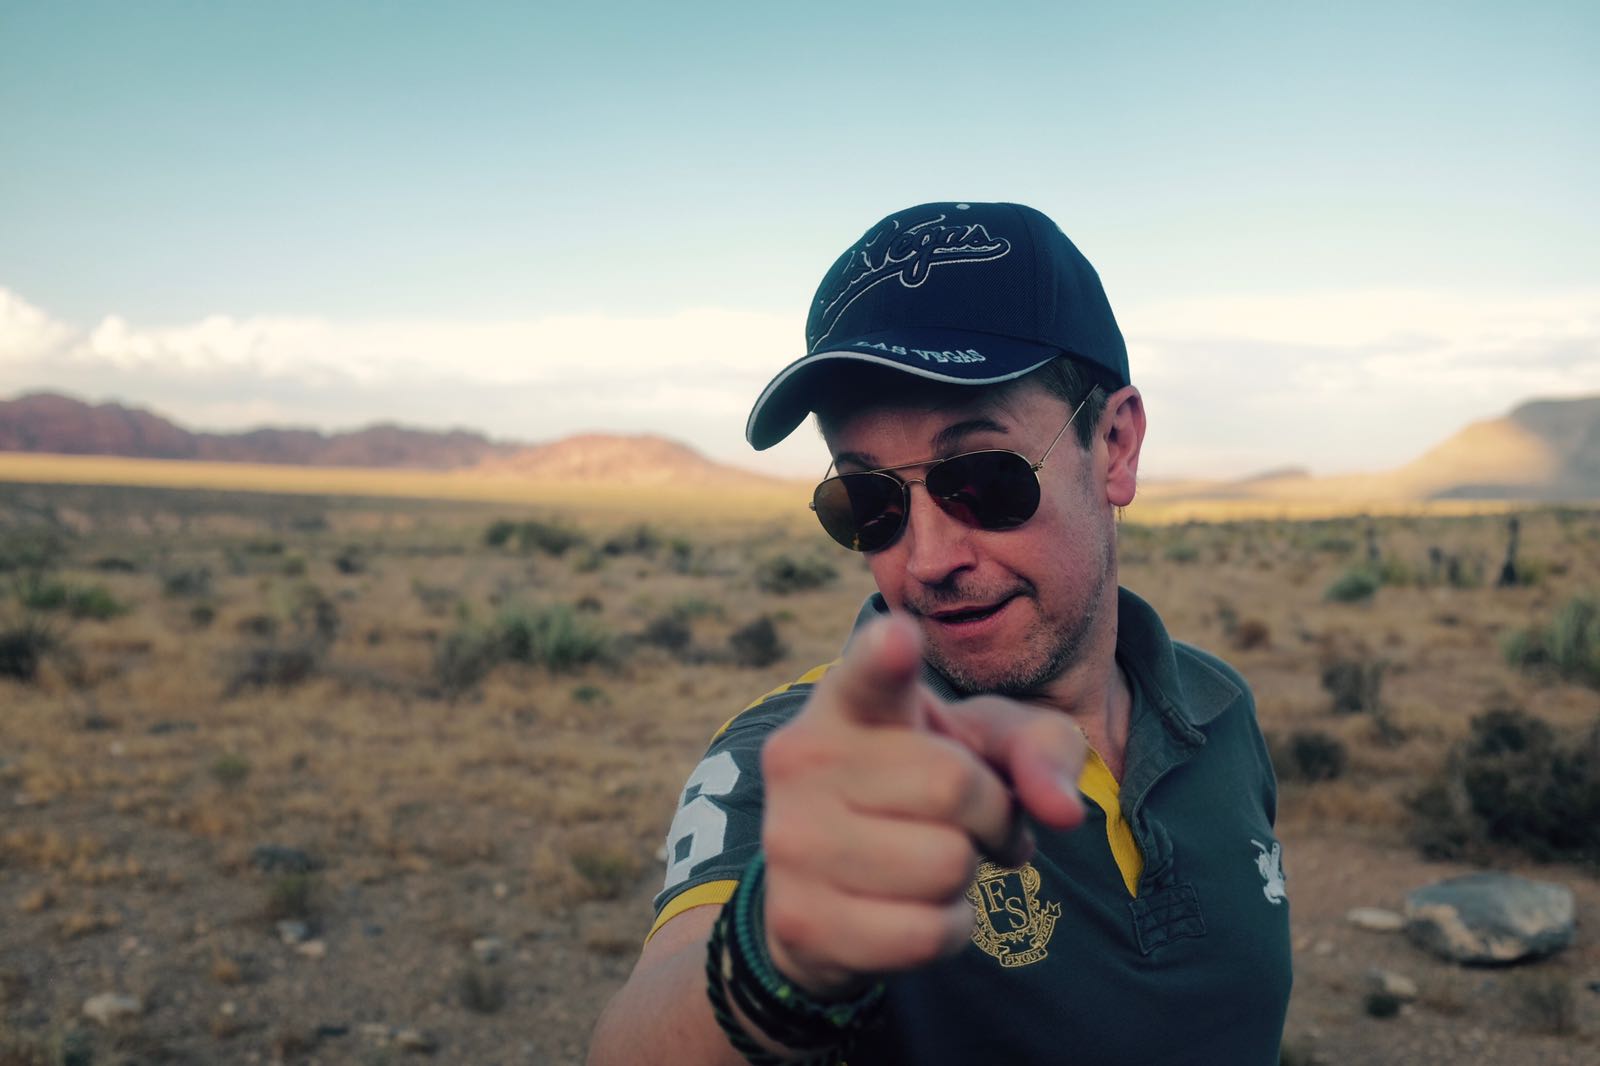 Dan in the desert